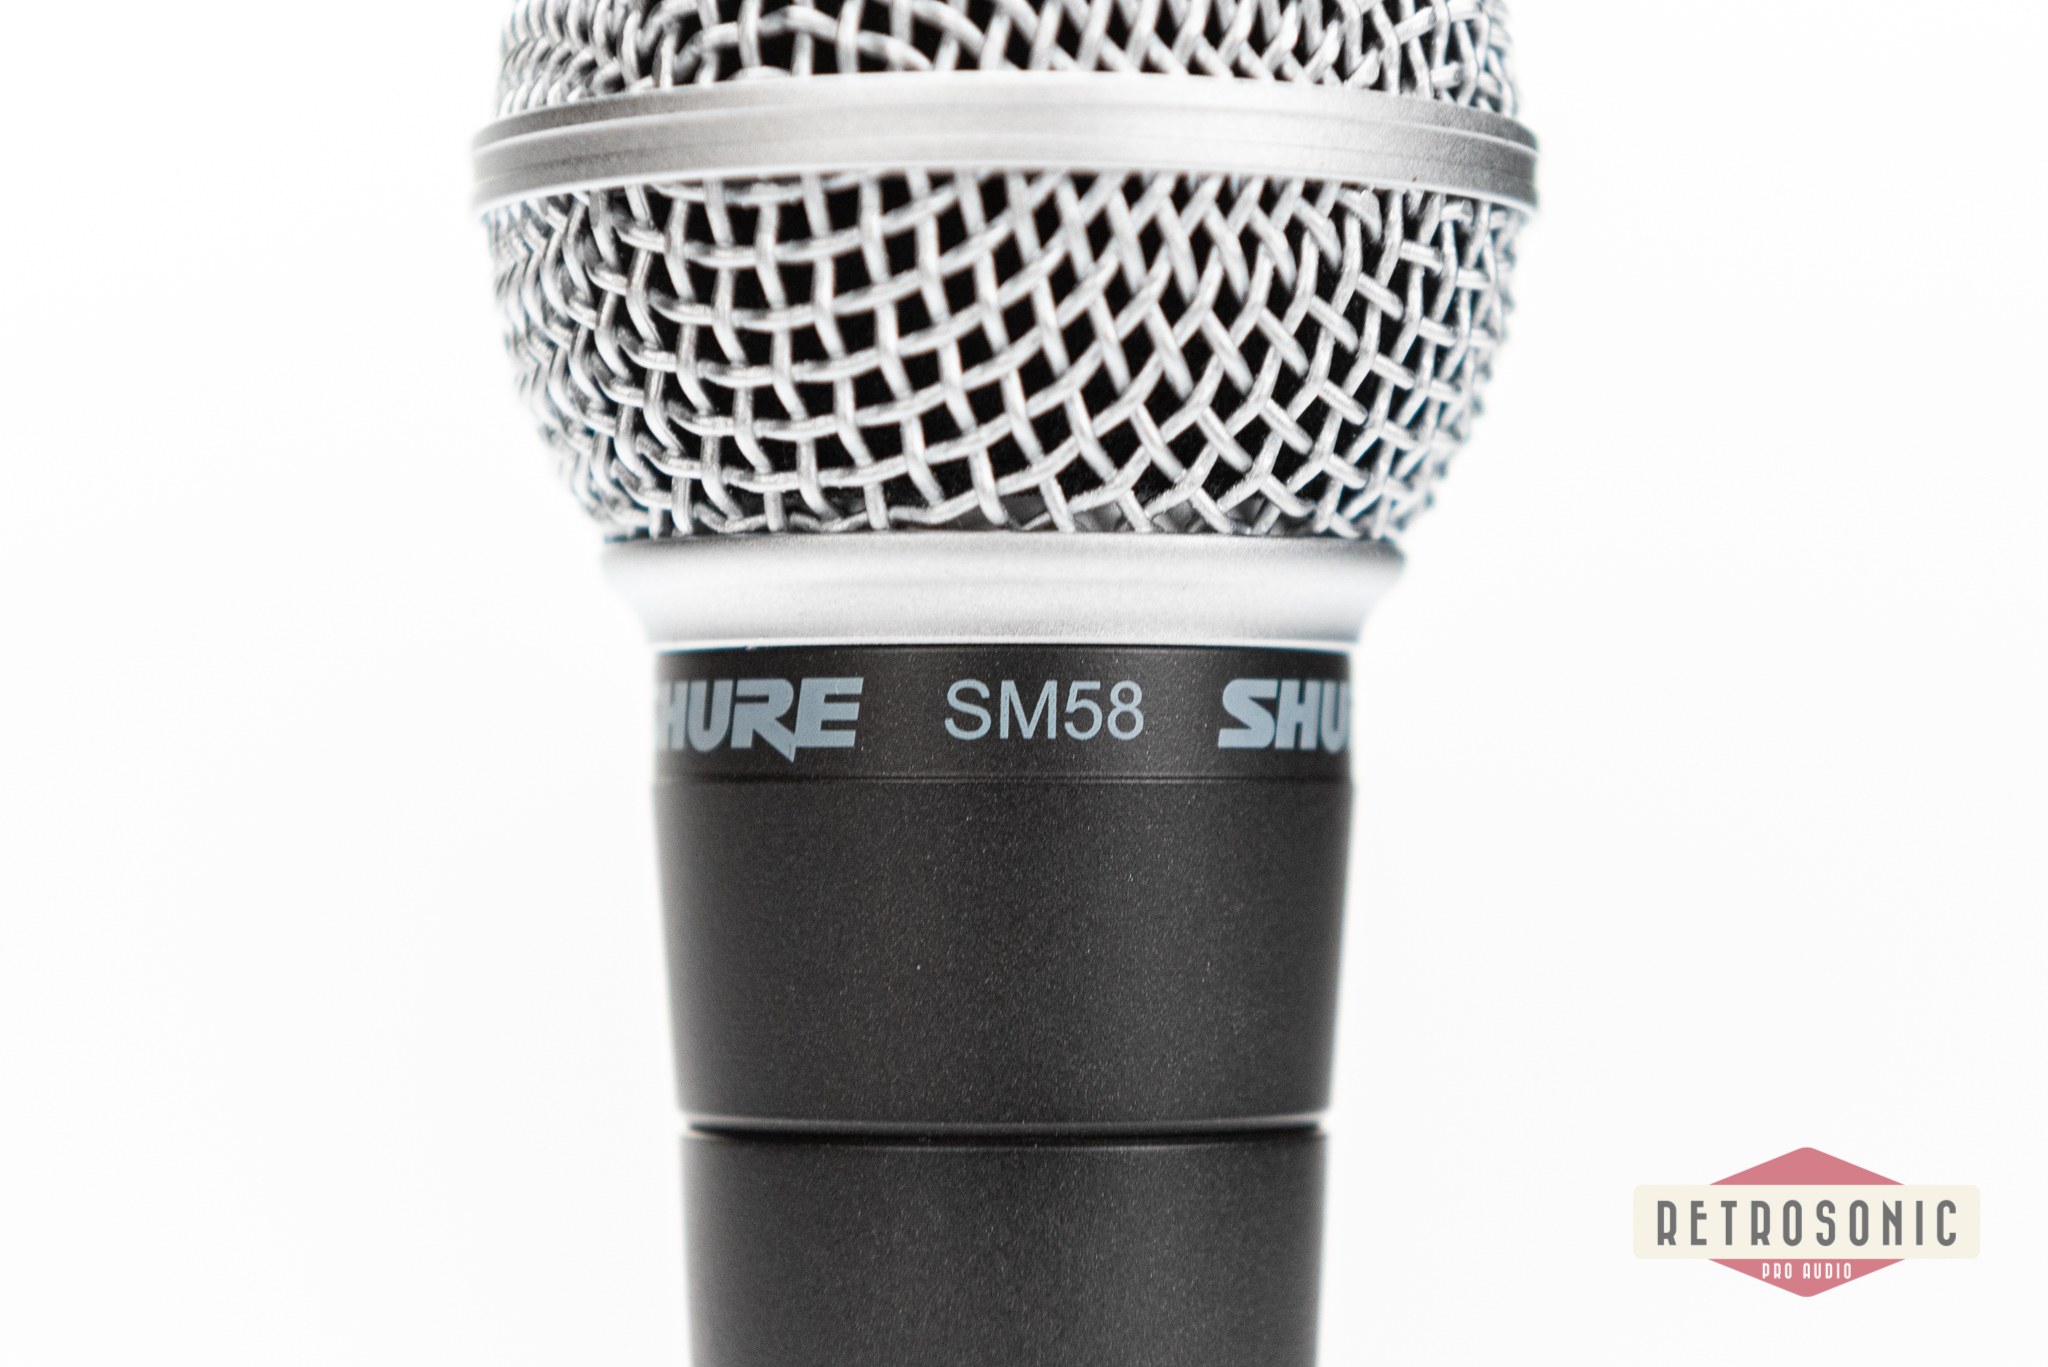 Shure SM58 40 Years Anniversary model unused